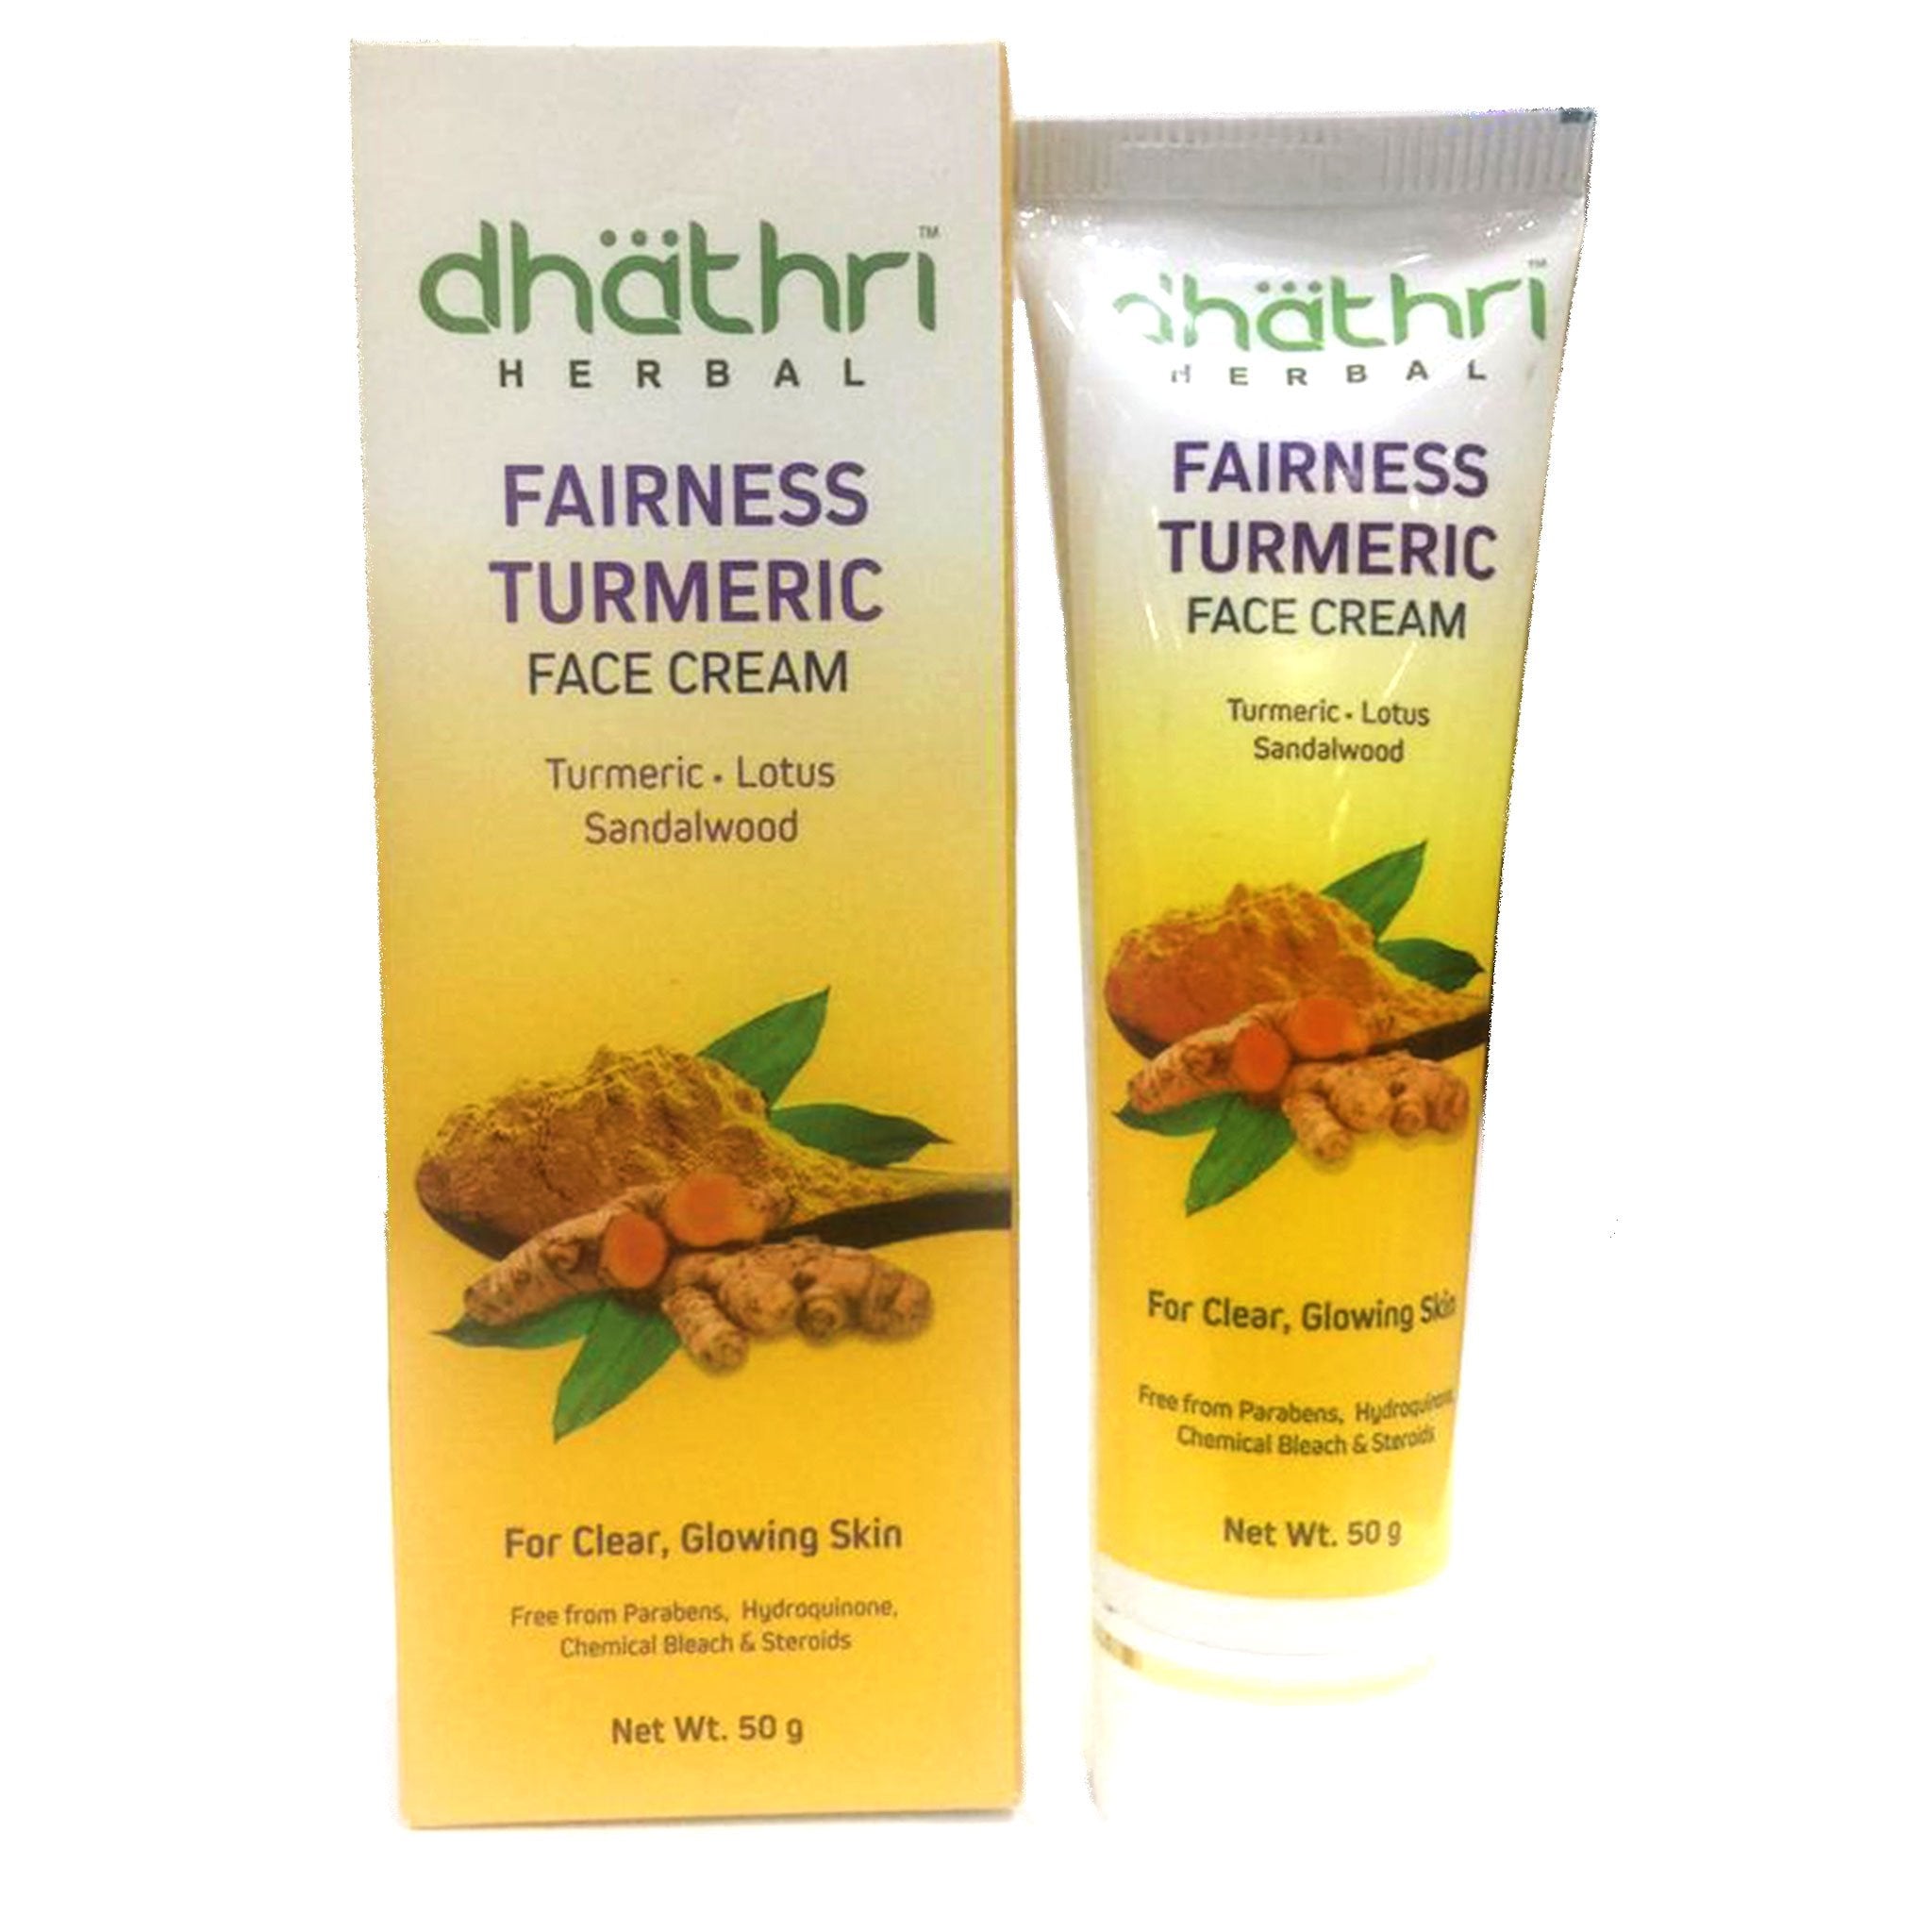 Dhathri Herbal Fairness Turmeric Face Cream 50g